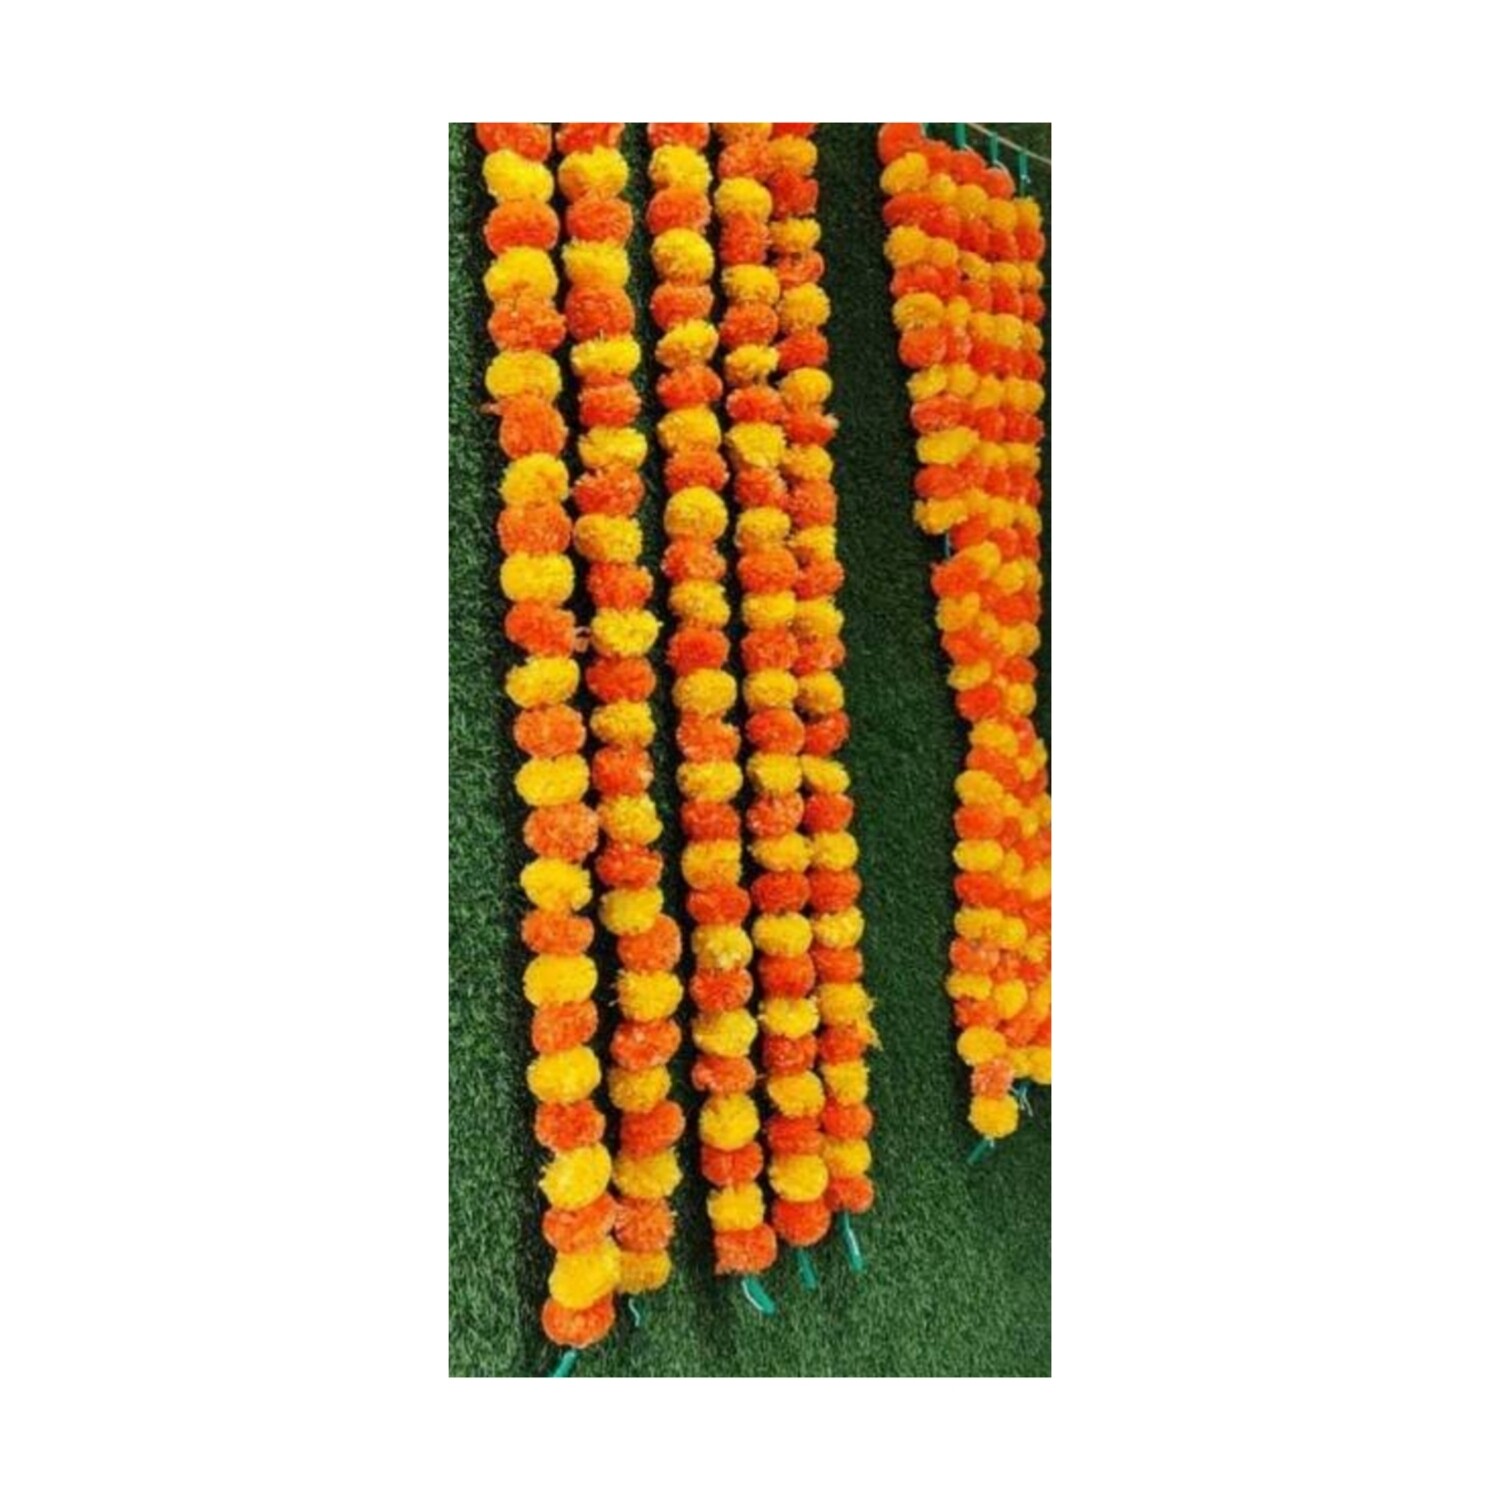 S.N.N Artificial Marigold Flower Garlands, for Parties, Festivals, Home Decoration, Diwali Decoration, Durga Puja Festival - Set of 3